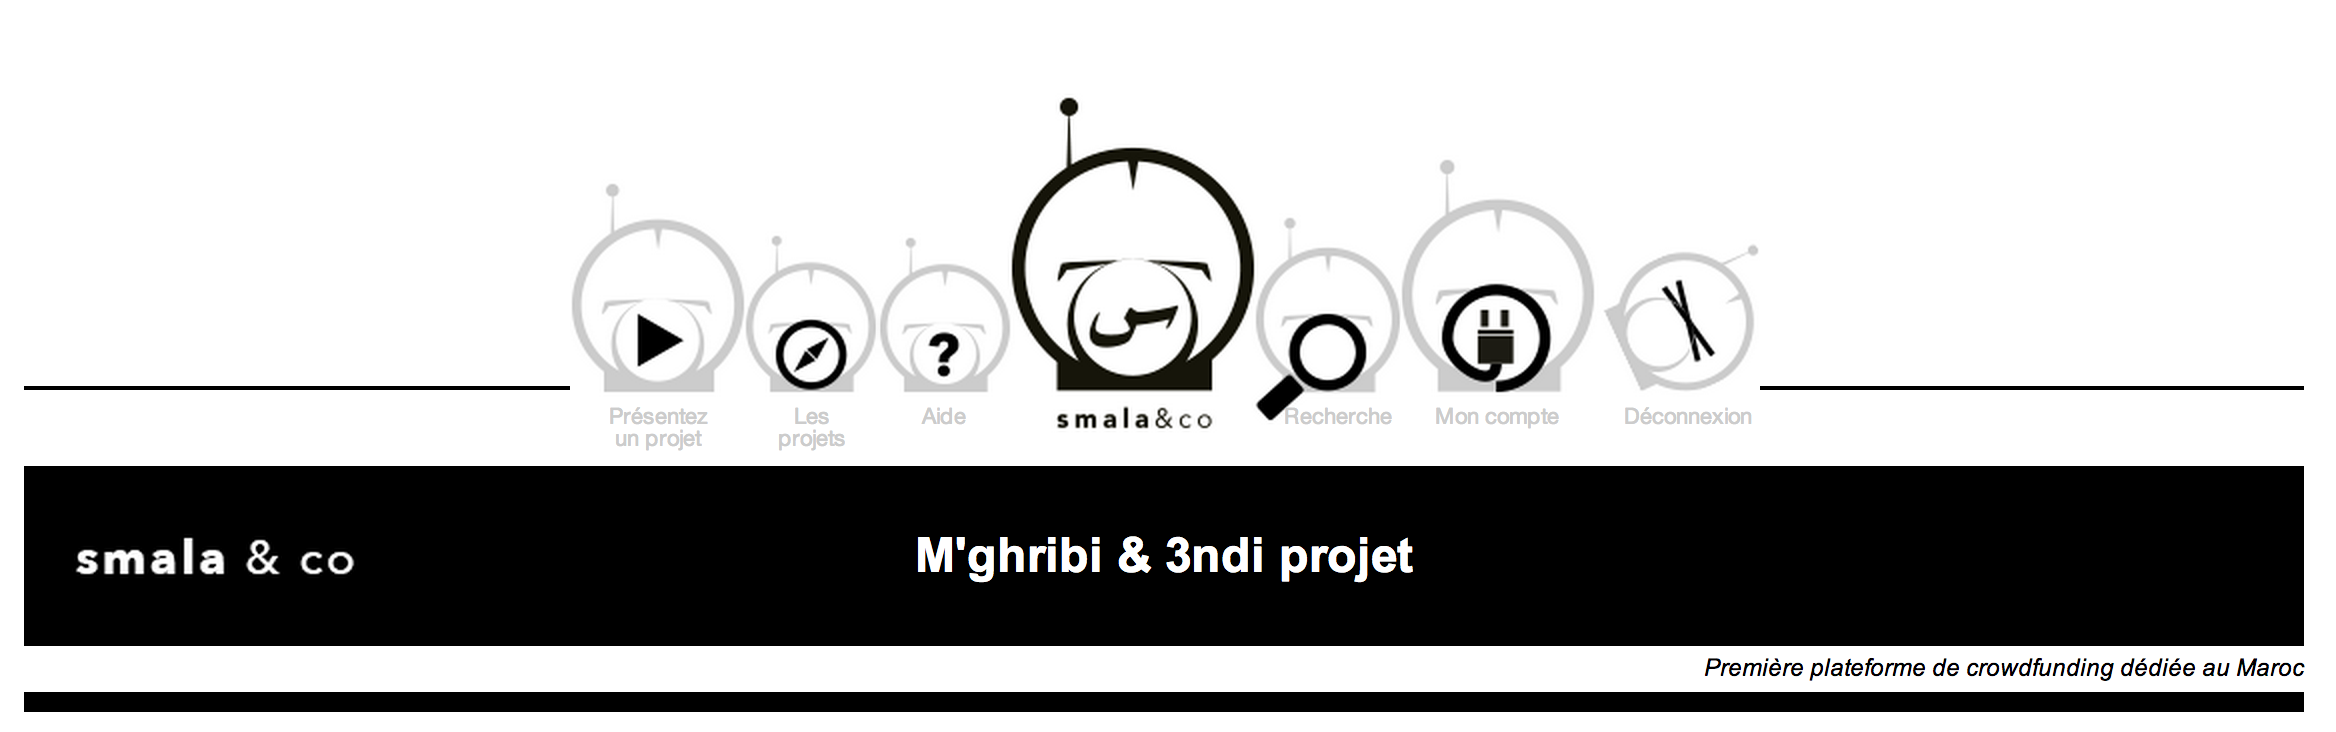 1ère plateforme de crowdfunding spéciale Maghreb